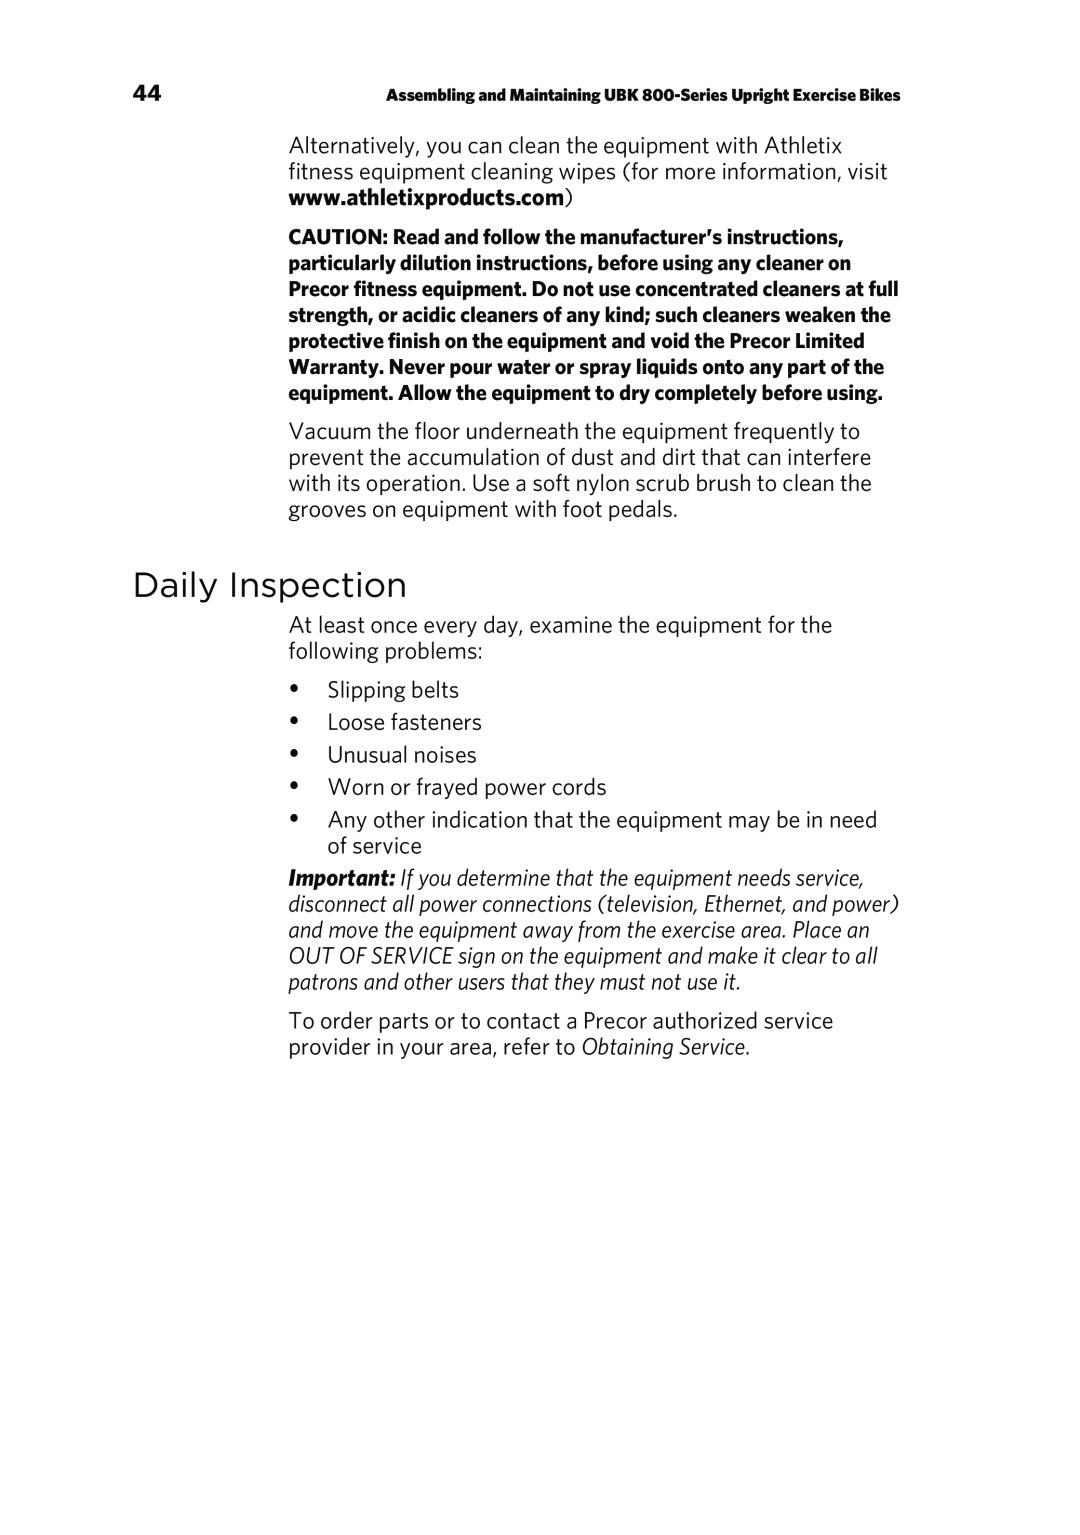 Precor P80 manual Daily Inspection 